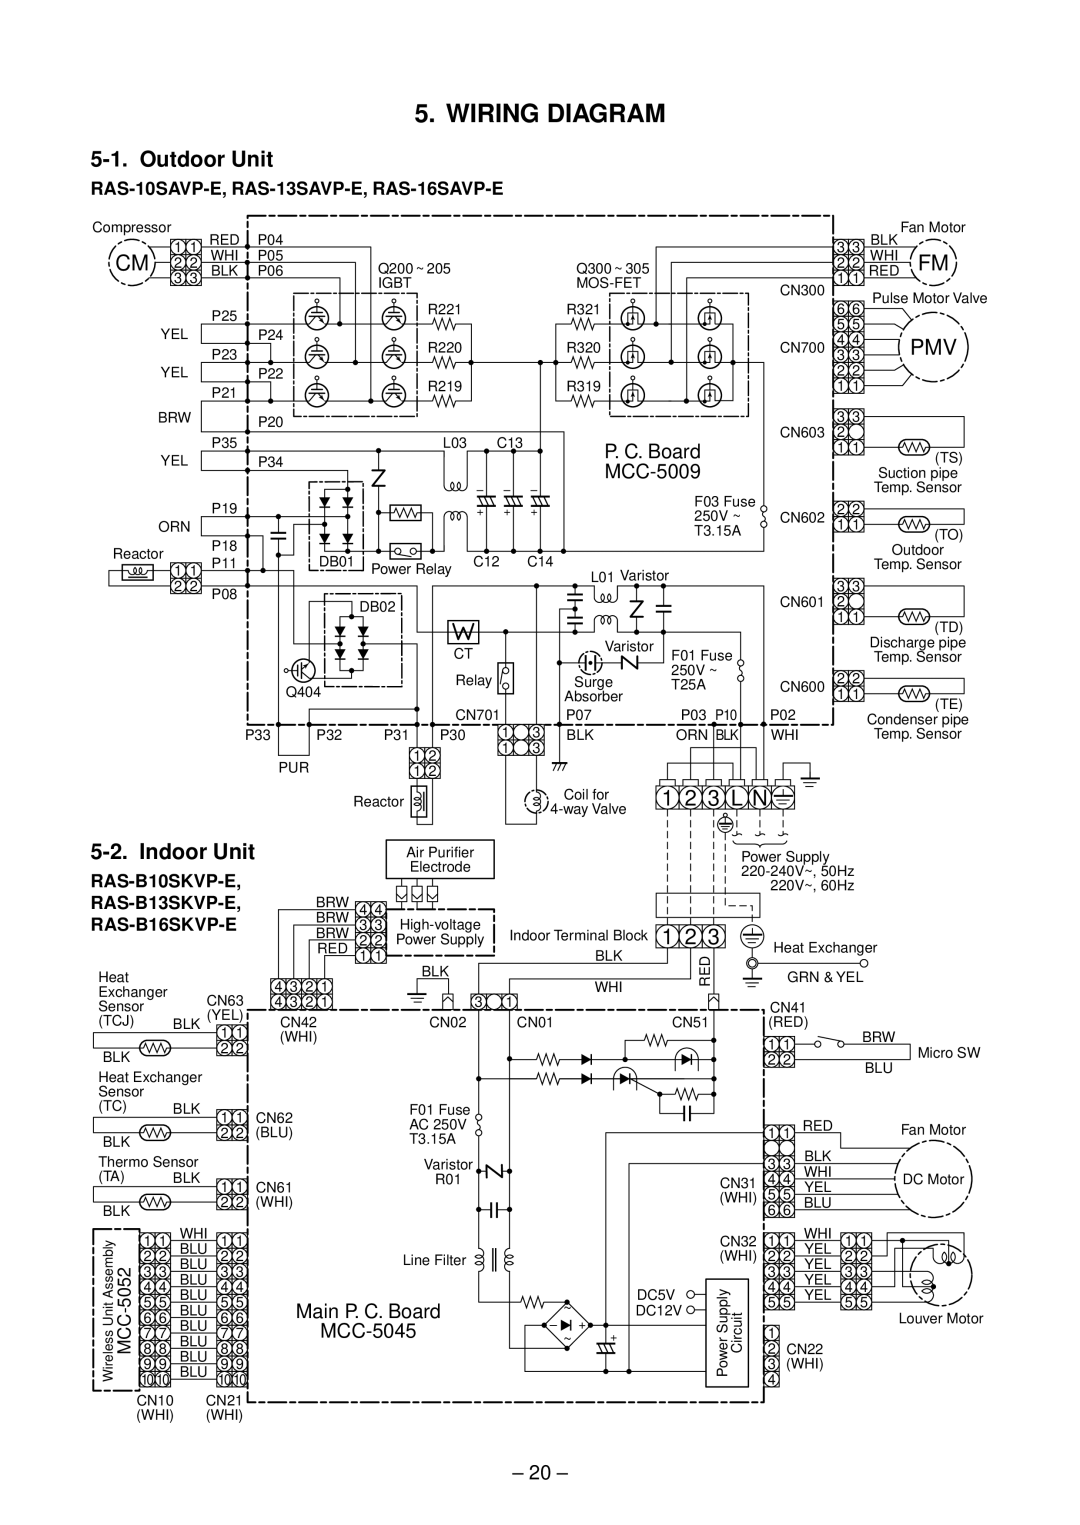 Toshiba RAS-10SAVP-E, RAS-B13SKVP-E, RAS-B10SKVP-E service manual Wiring Diagram, Outdoor Unit, Indoor Unit 